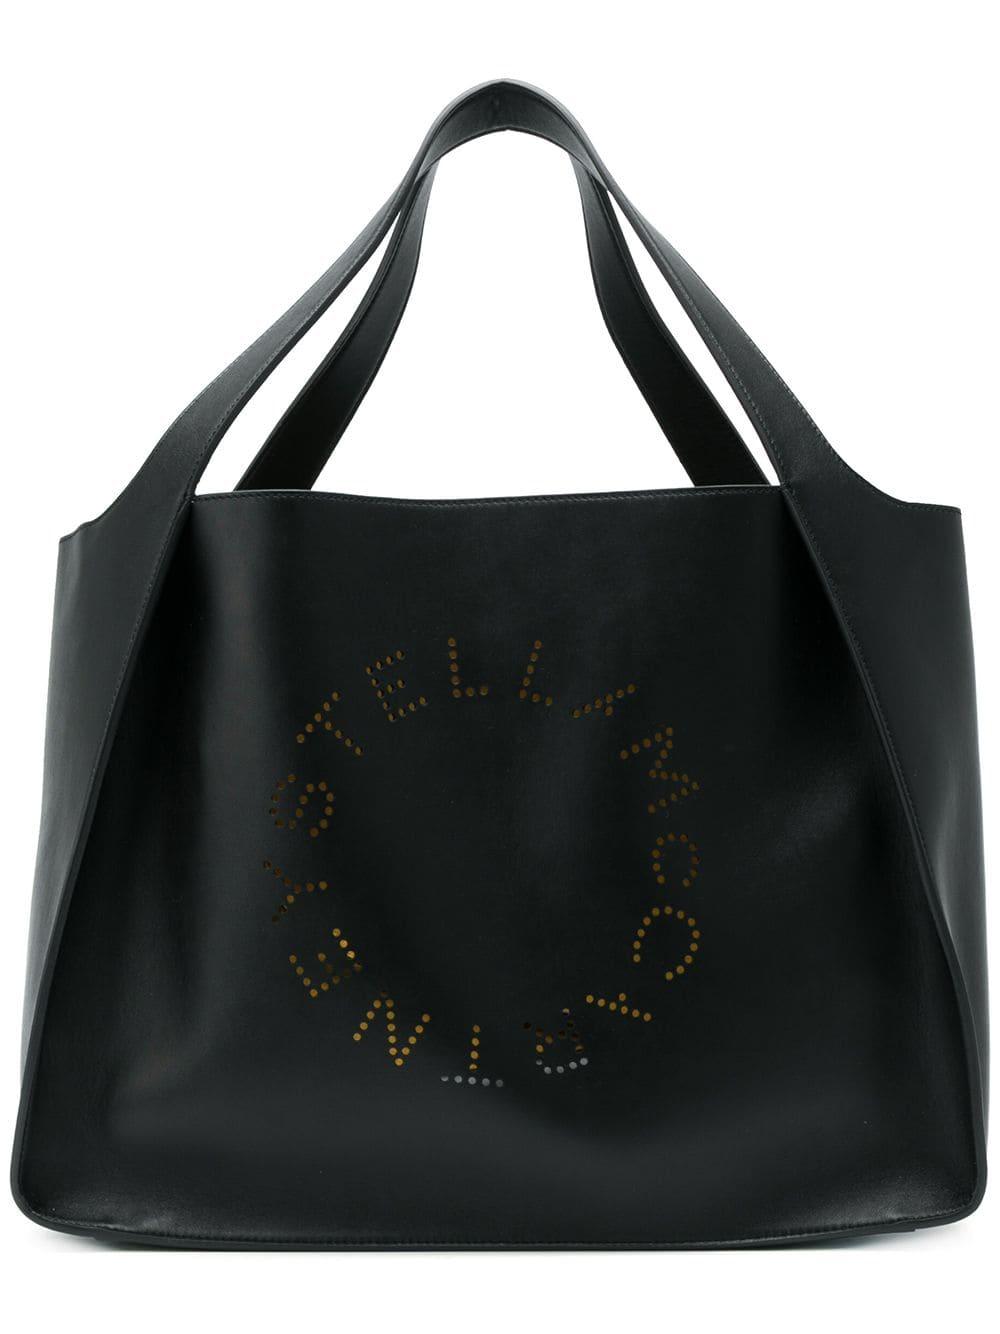 Stella McCartney Leather Logo Tote Bag in Black - Lyst